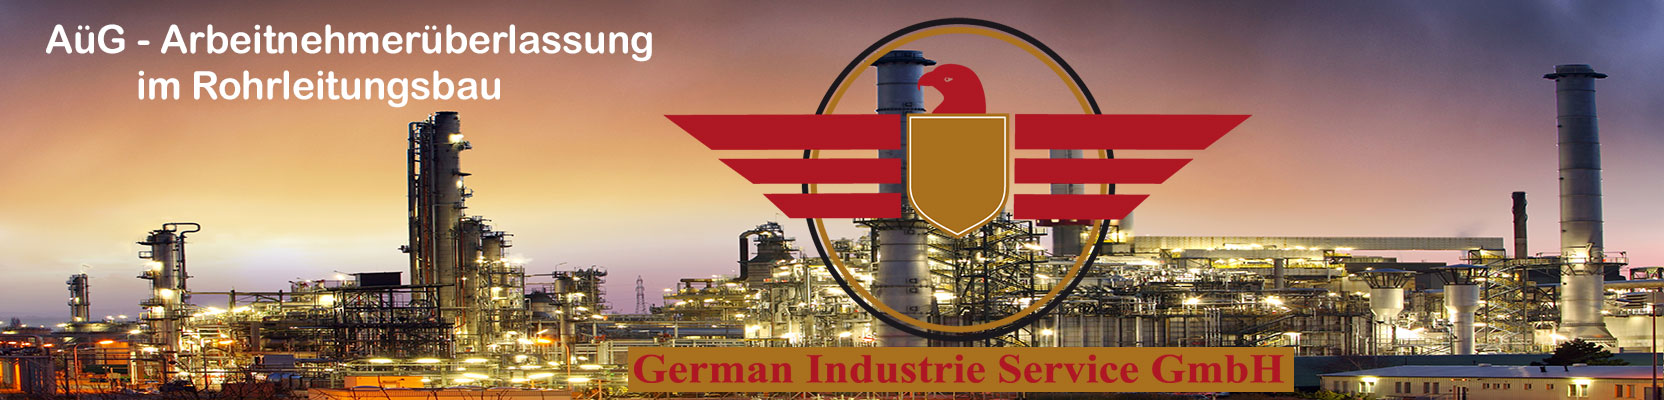 German Industrie Service GmbH